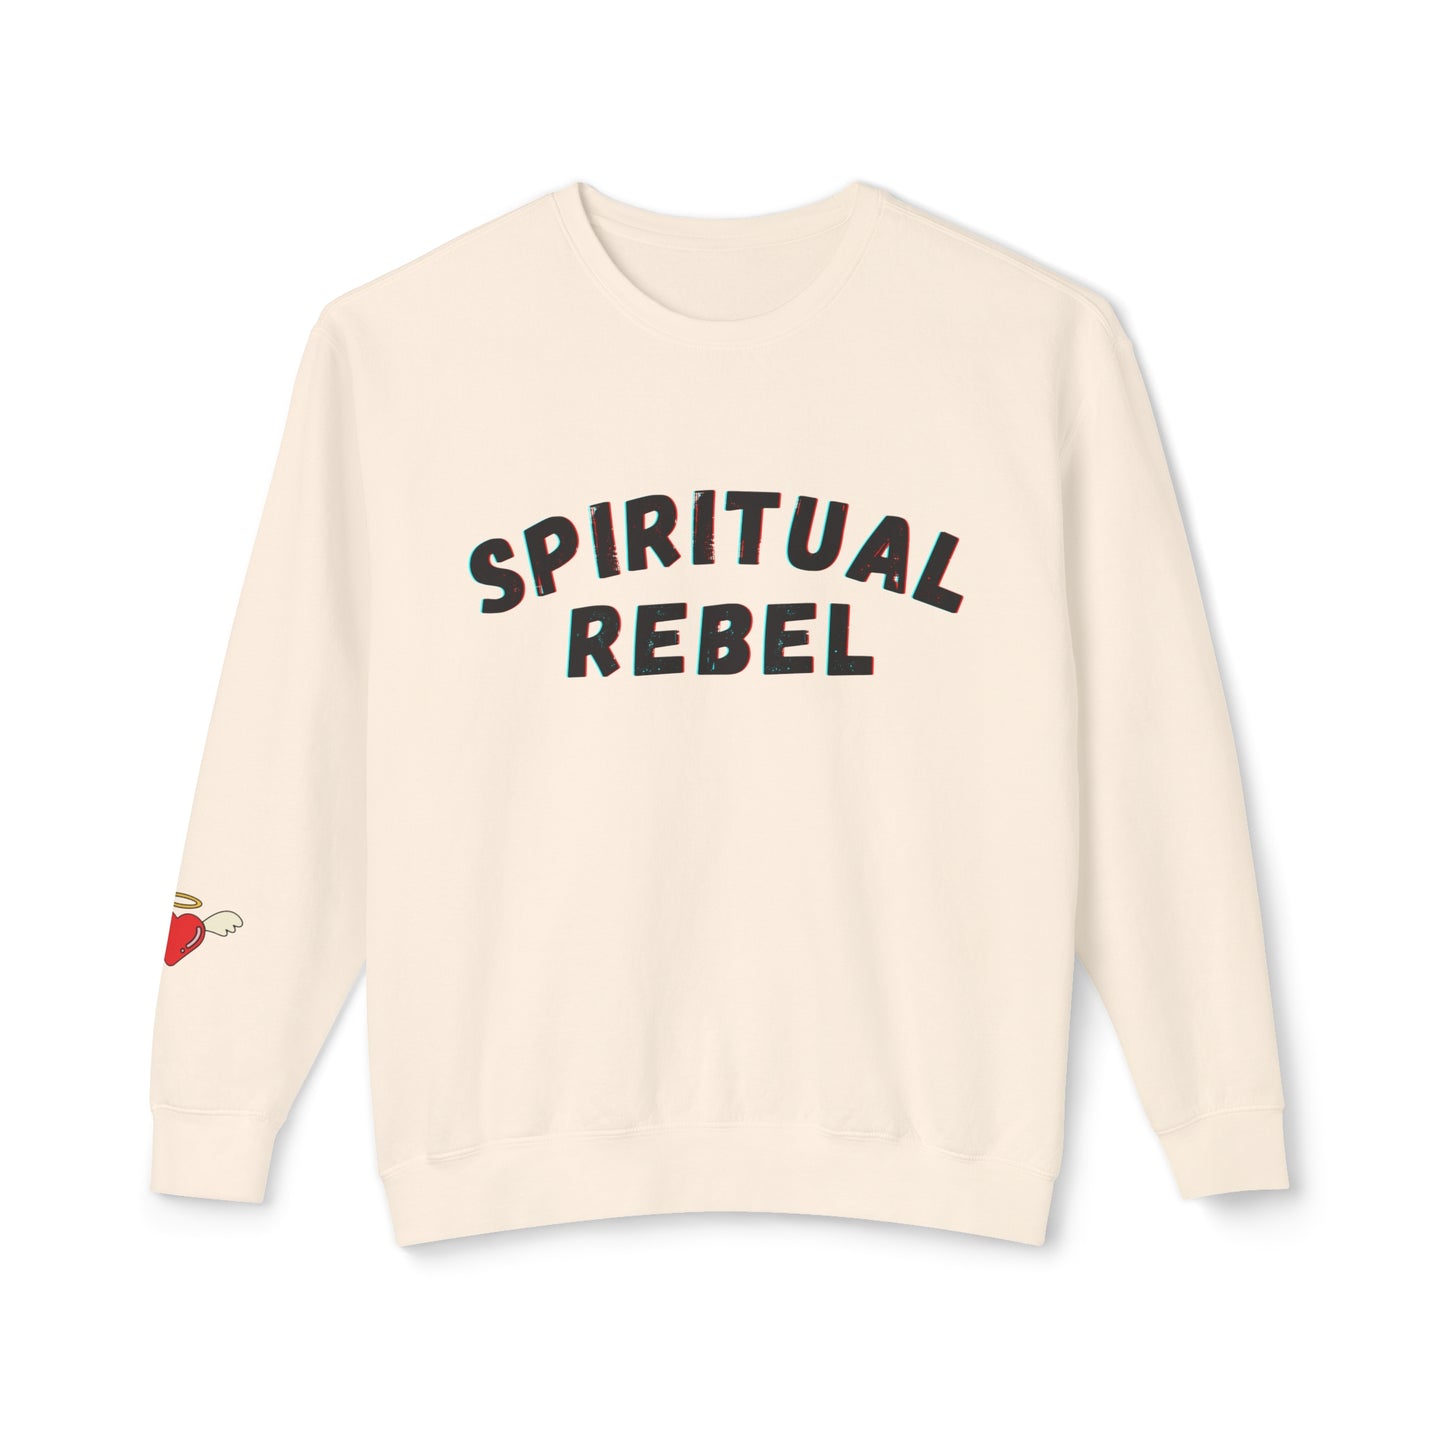 SPIRITUAL REBEL Unisex Lightweight Crewneck Sweatshirt